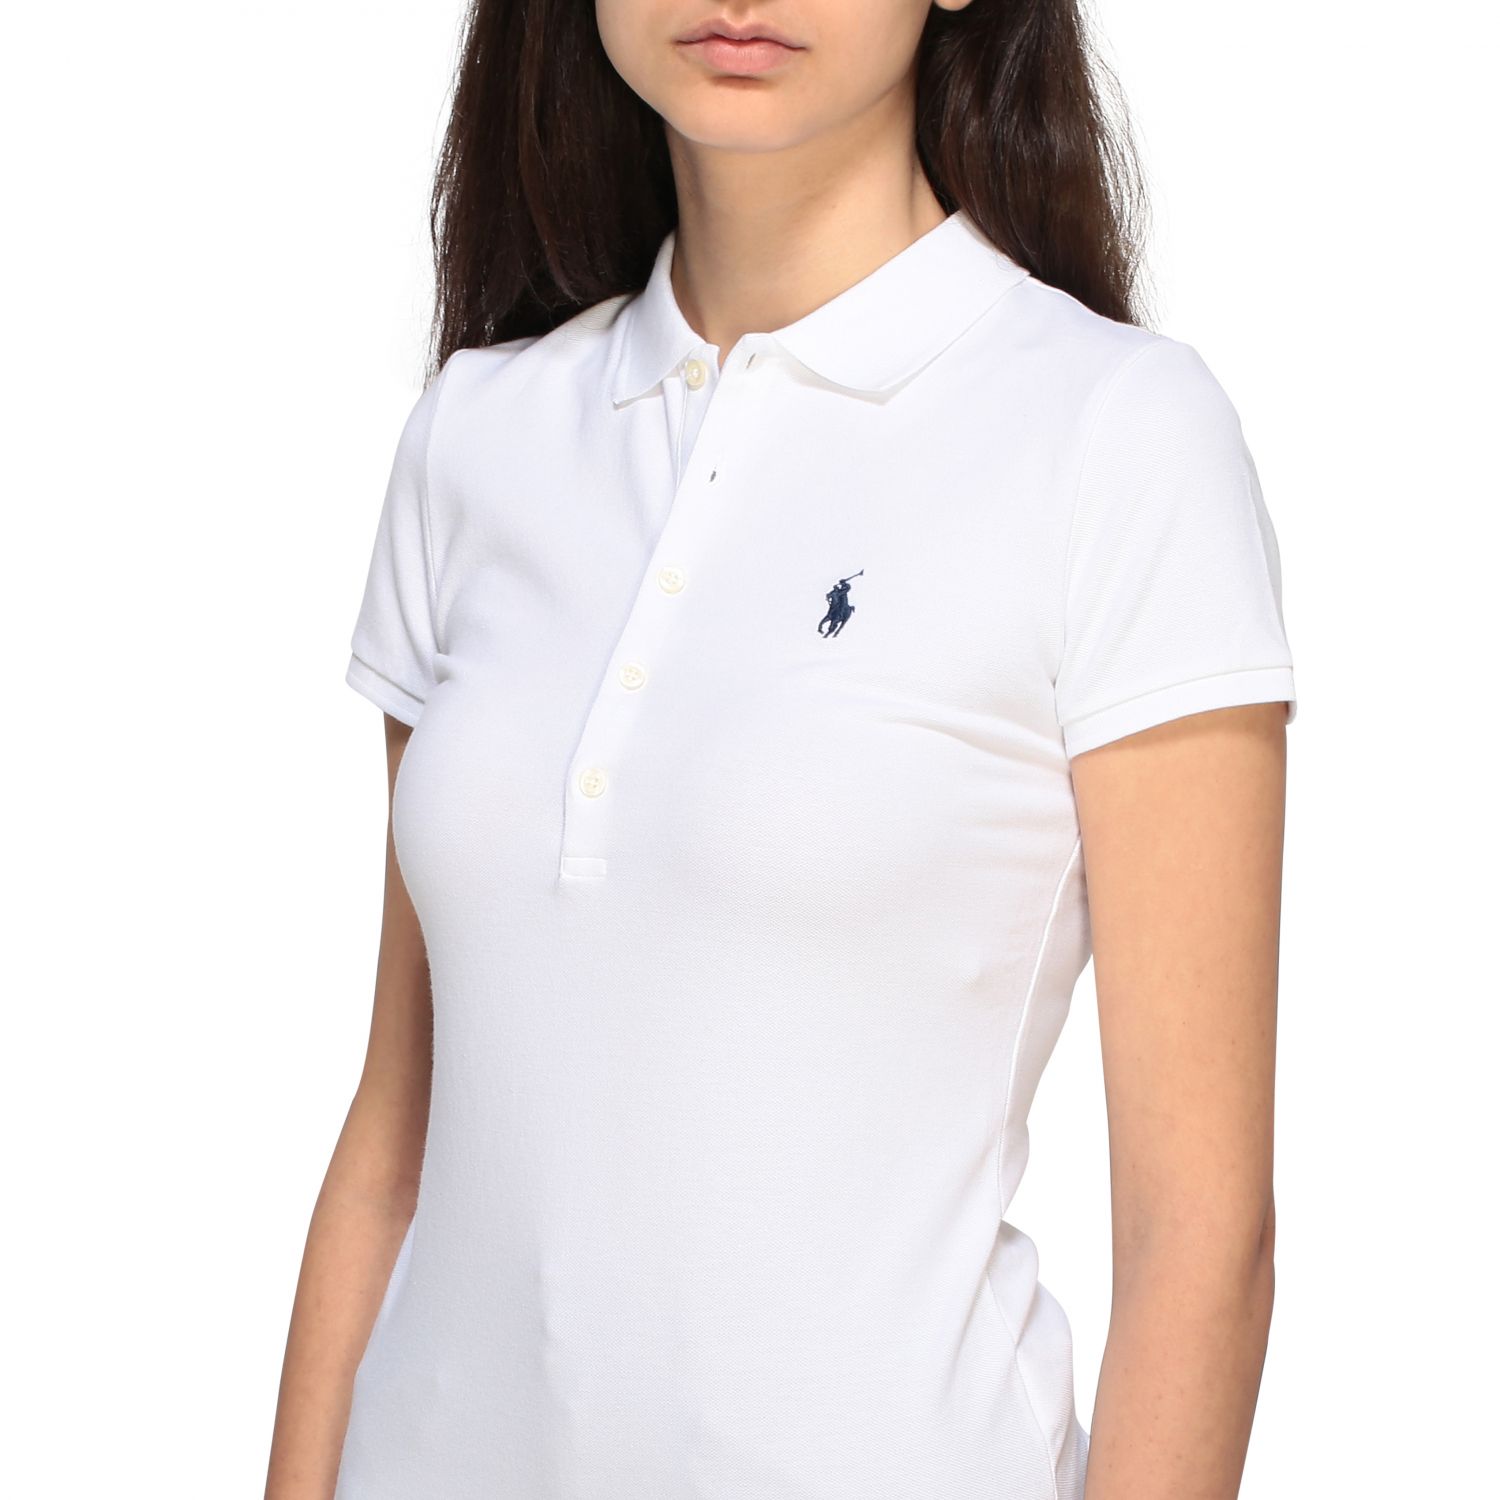 POLO RALPH LAUREN: polo shirt for woman - White | Polo Ralph Lauren ...